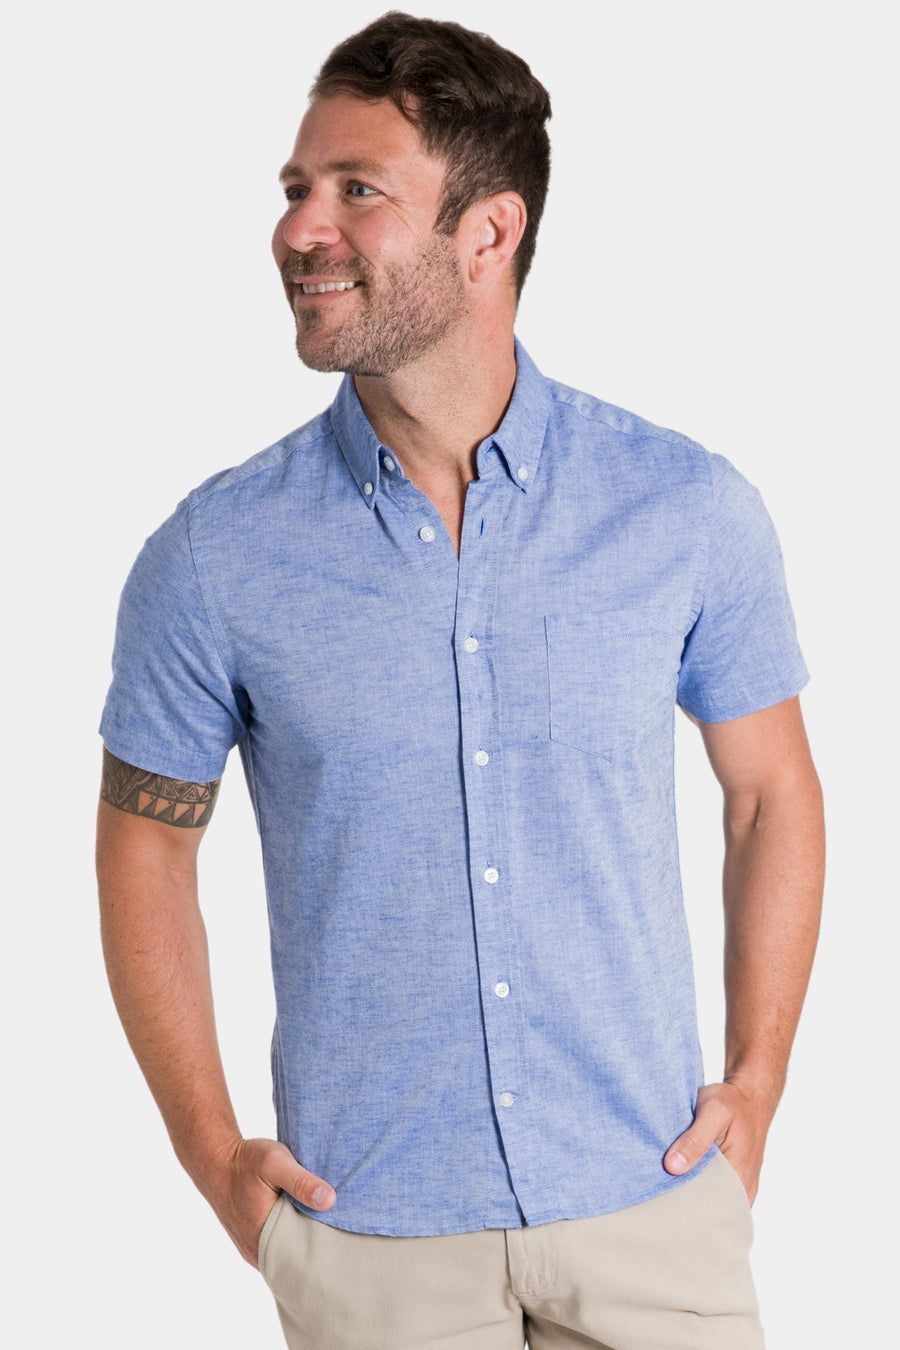 Buy Short Sleeve Shirts for Short Men | Ash & Erie